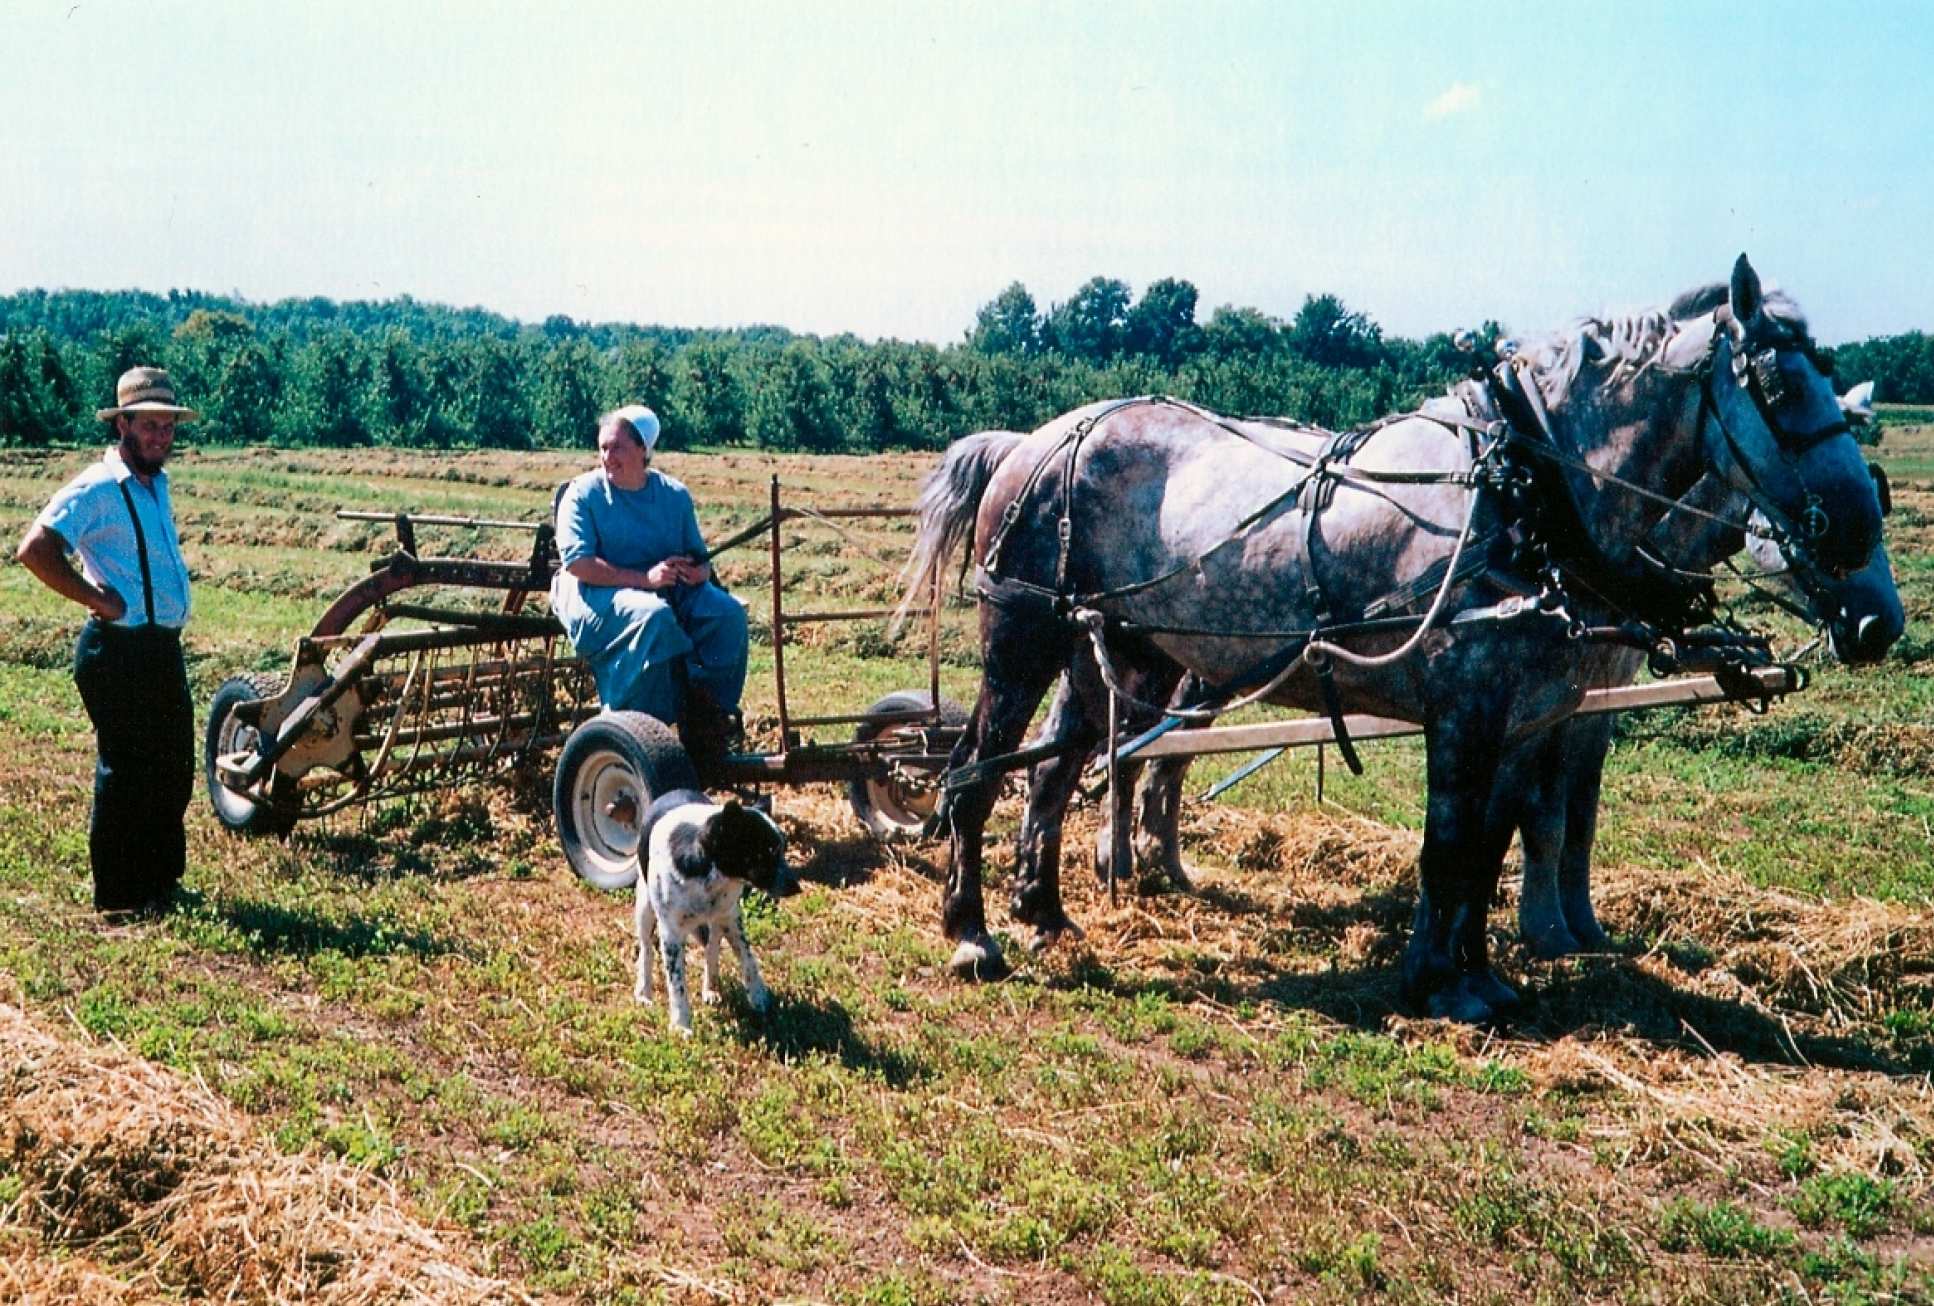 A photo portrait of an Amish family on a farm